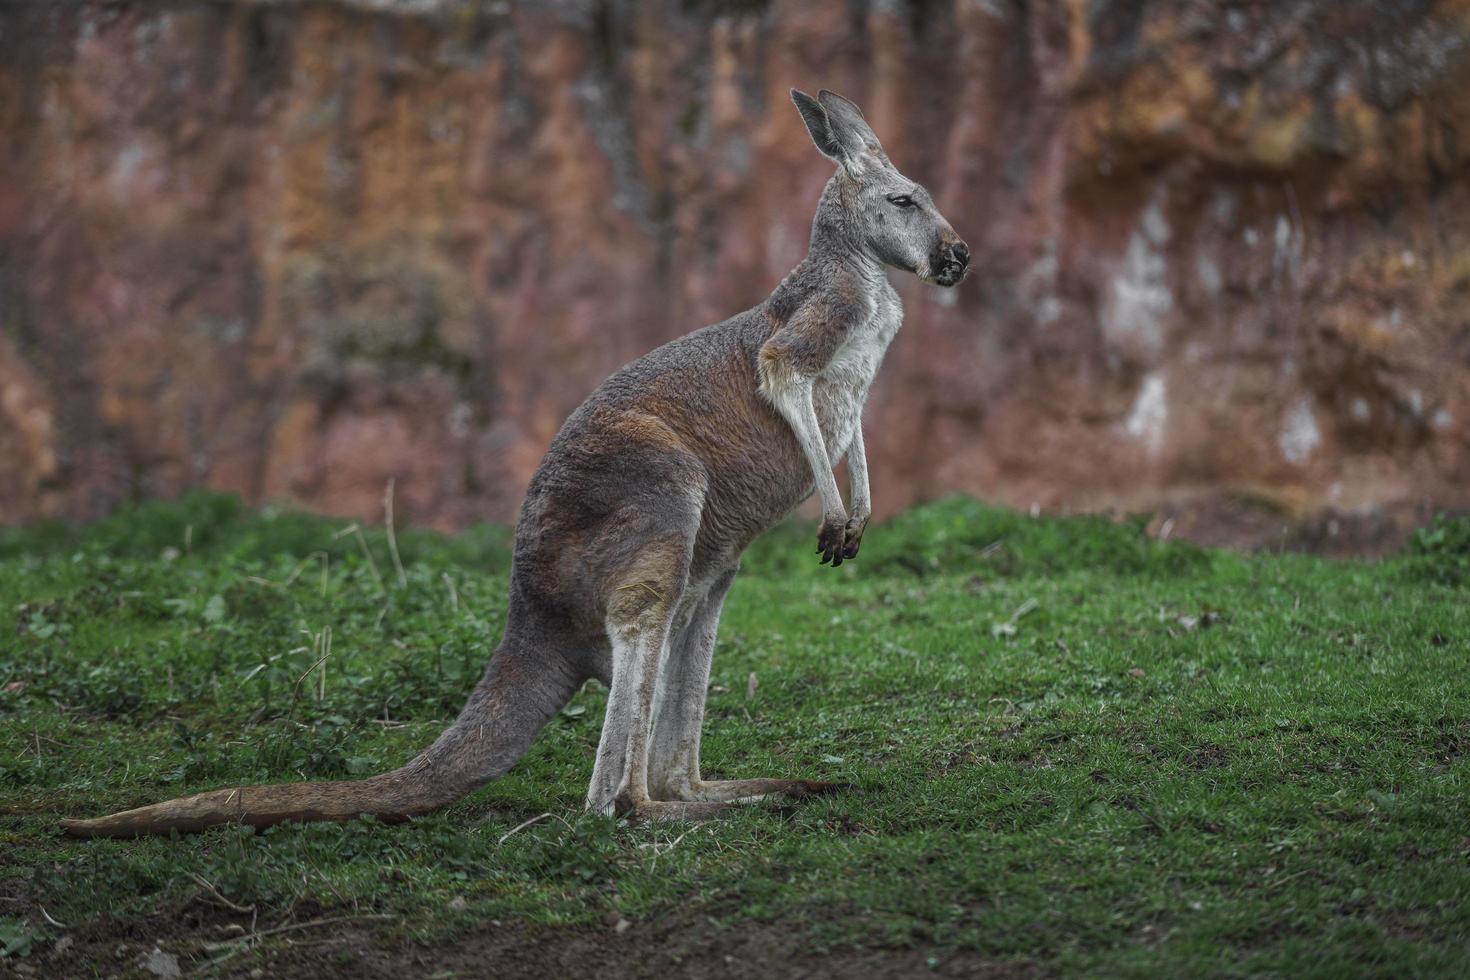 Red kangaroo on grass photo